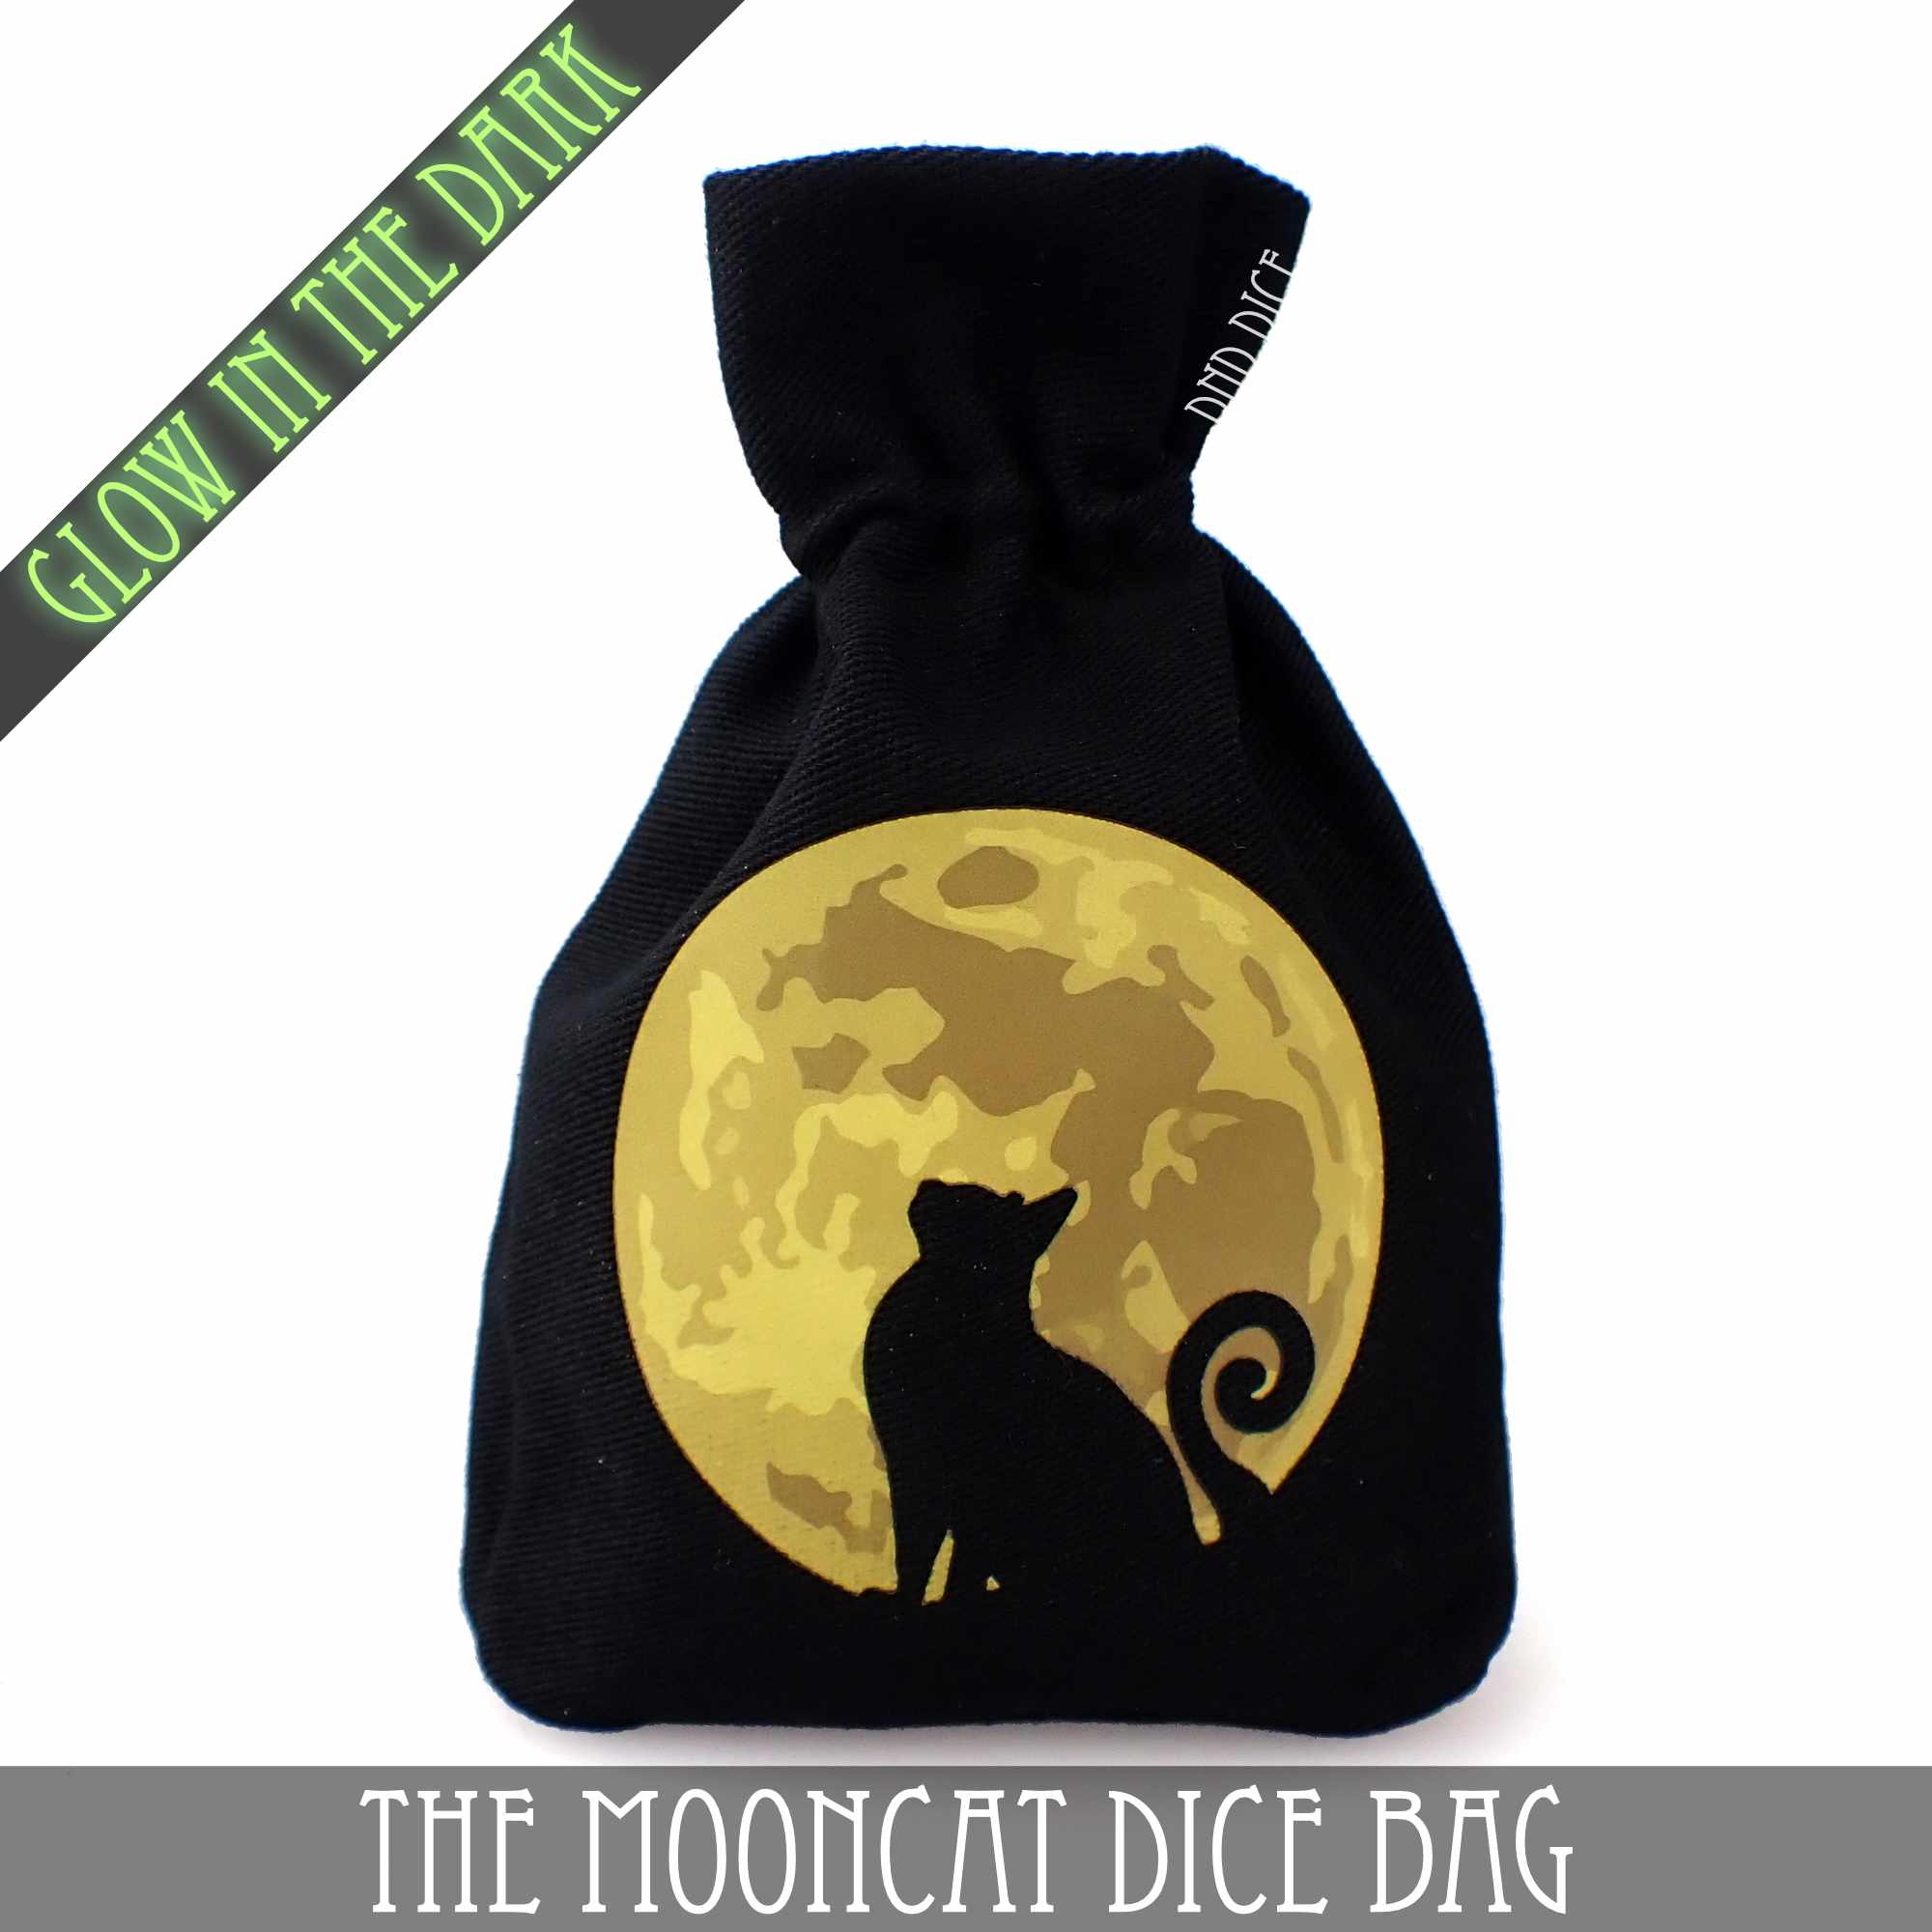 The Mooncat Glow in the Dark Bag